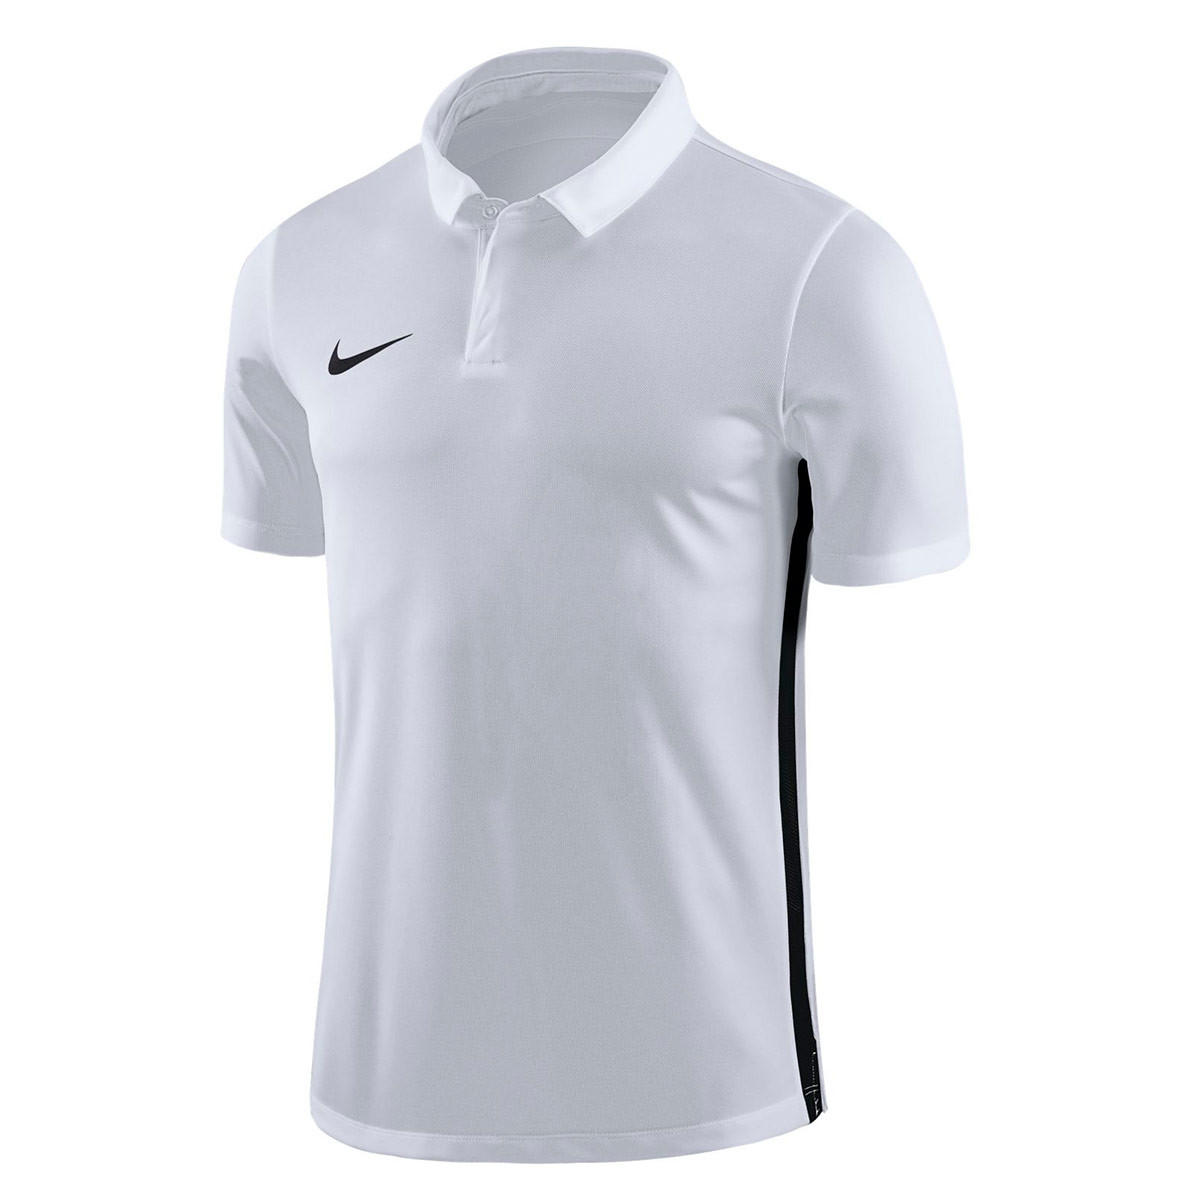 Polo Nike Academy 18 m/c White-Black - Tienda de fútbol Fútbol Emotion